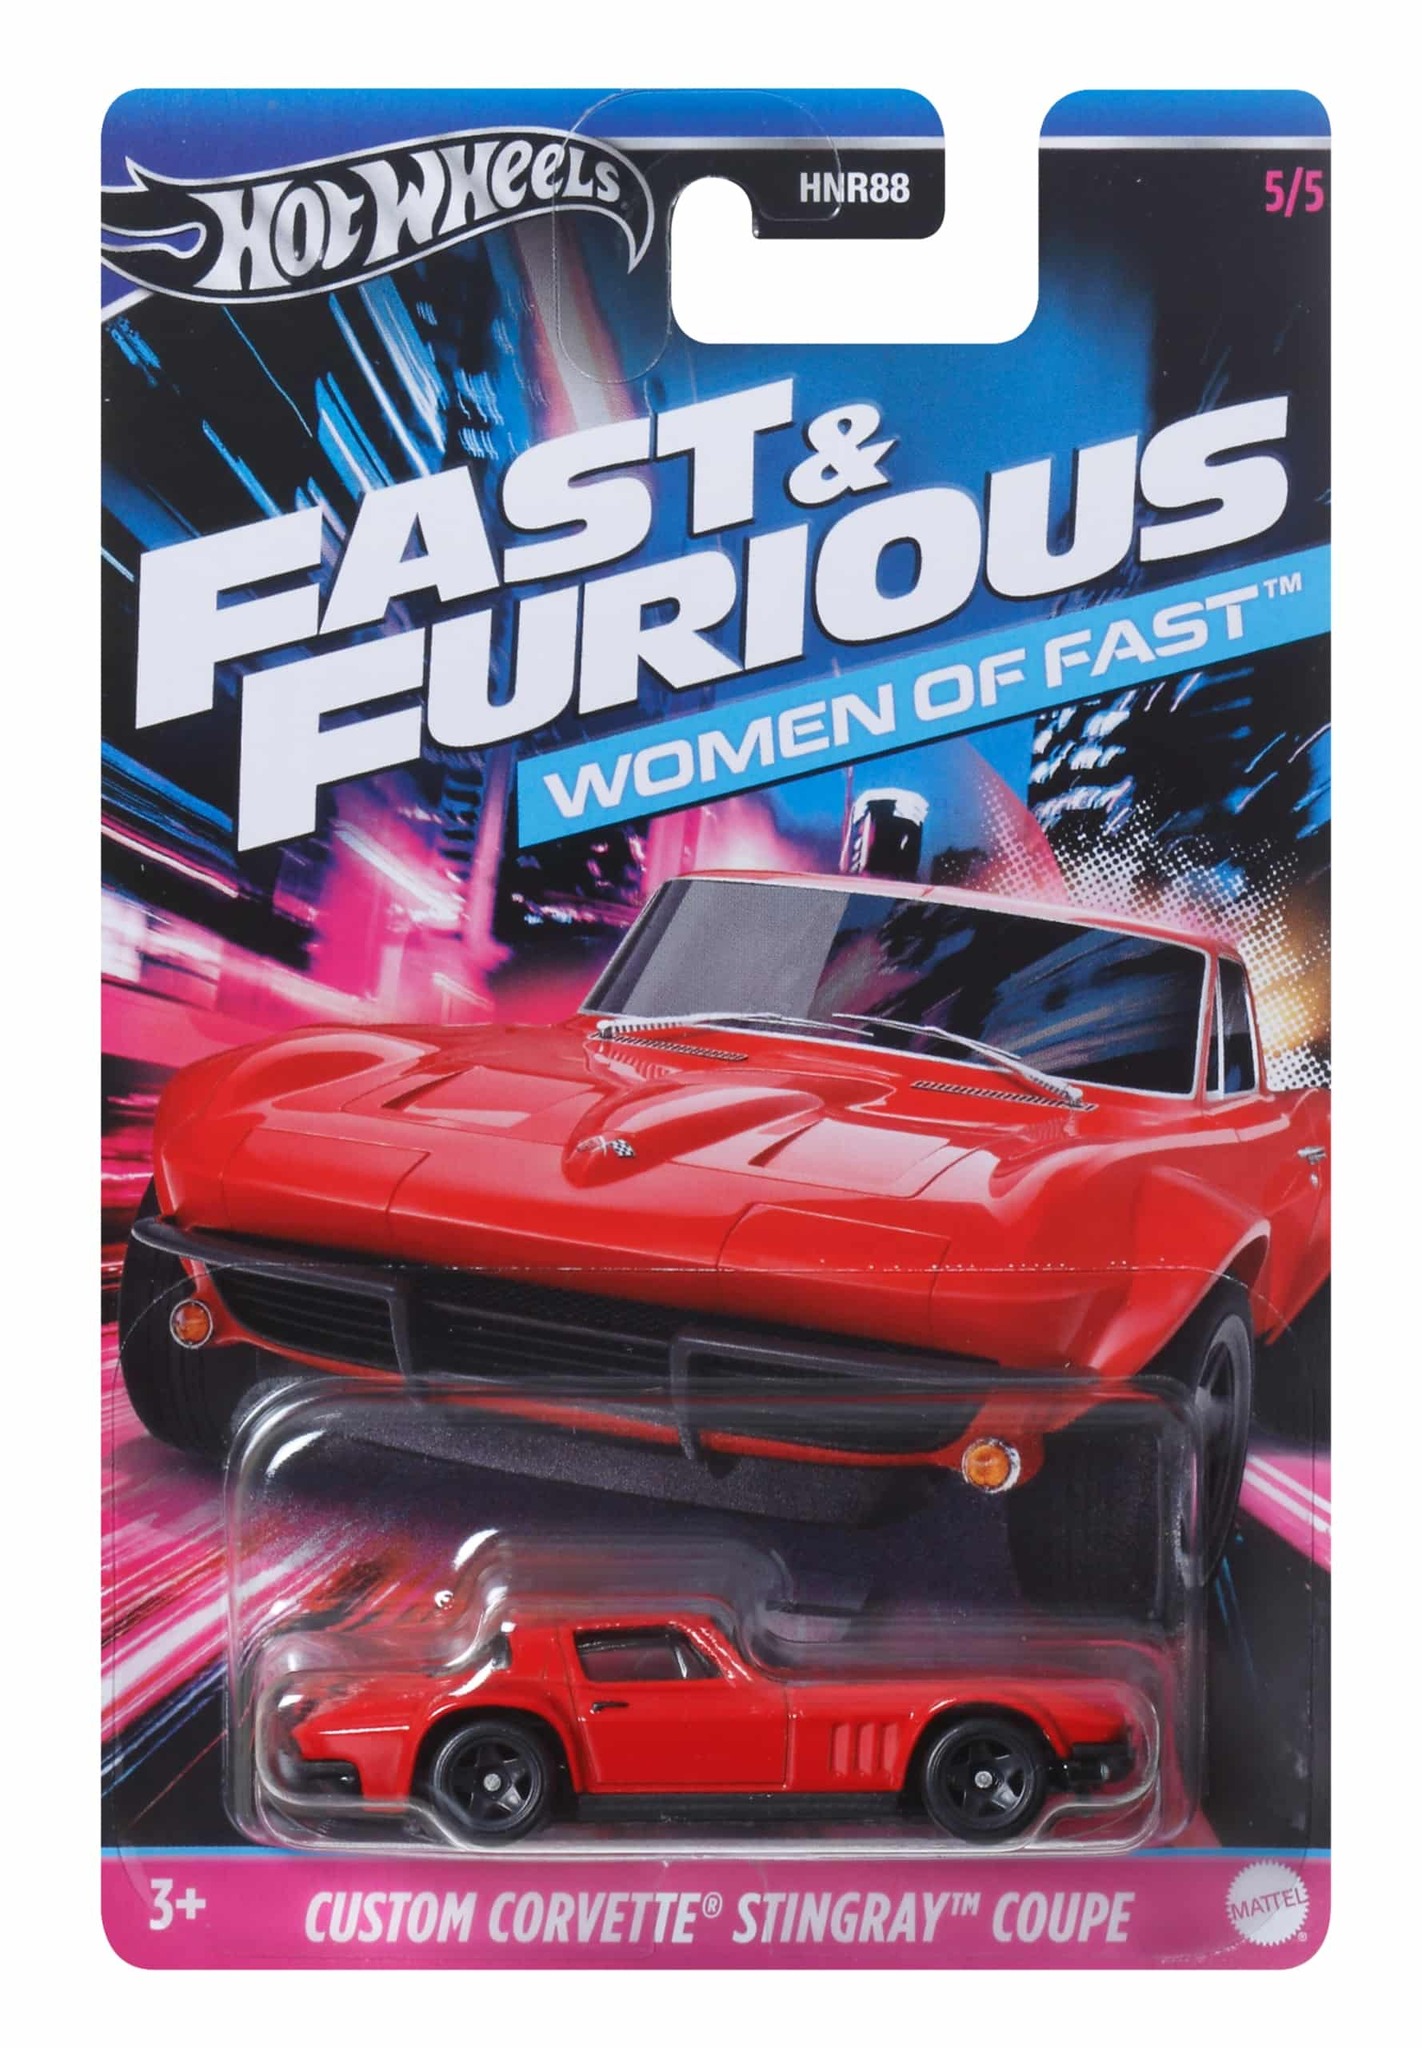 Fast & Furious Women of fast #5/5 Corvette Stingray Coupe Custom